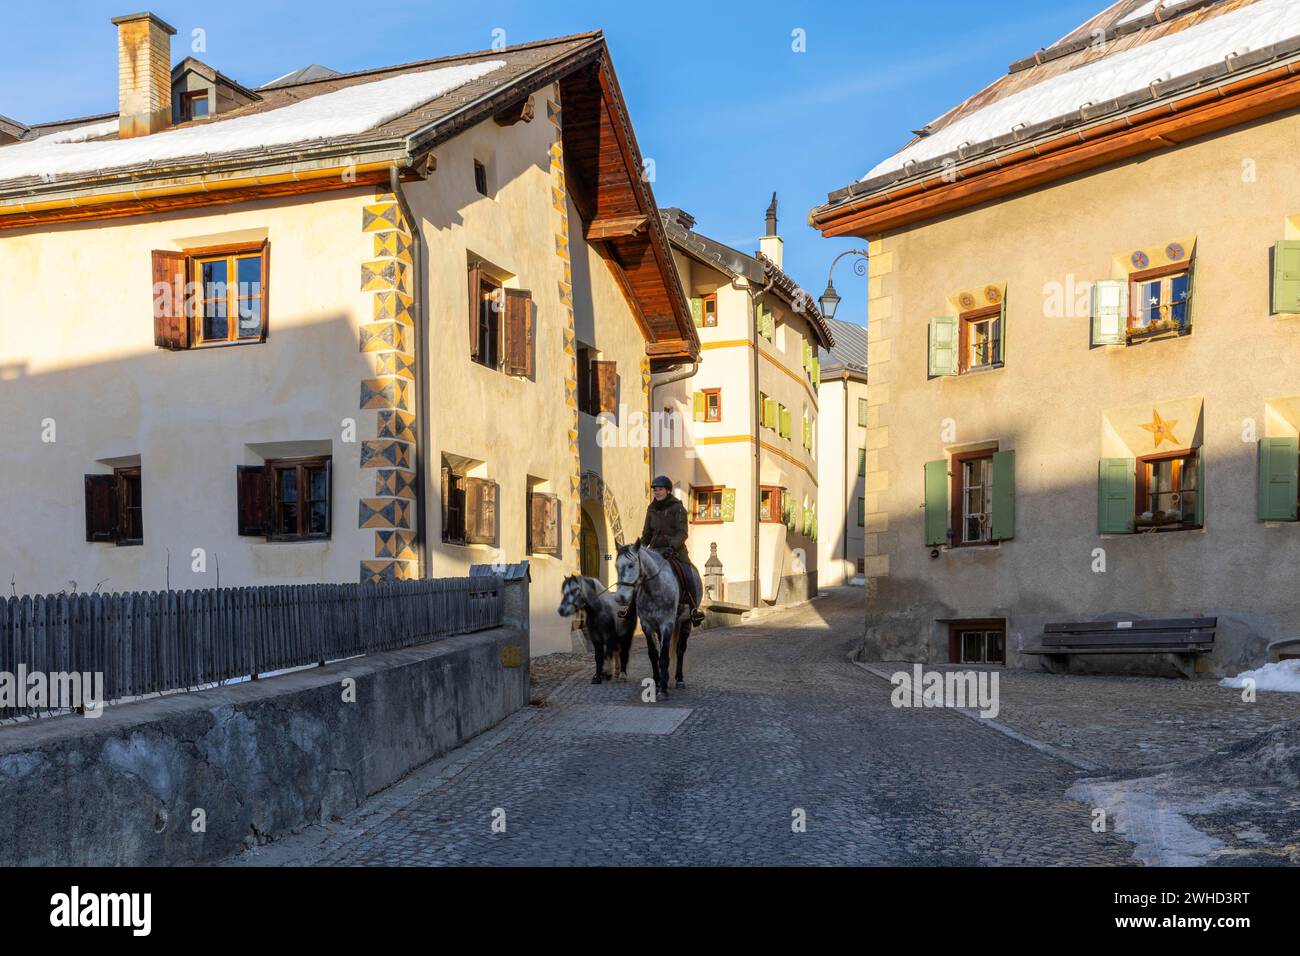 Horsewoman on horseback, historic houses, sgraffito, facade decorations, historic village, Guarda, Engadin, Grisons, Switzerland Stock Photo